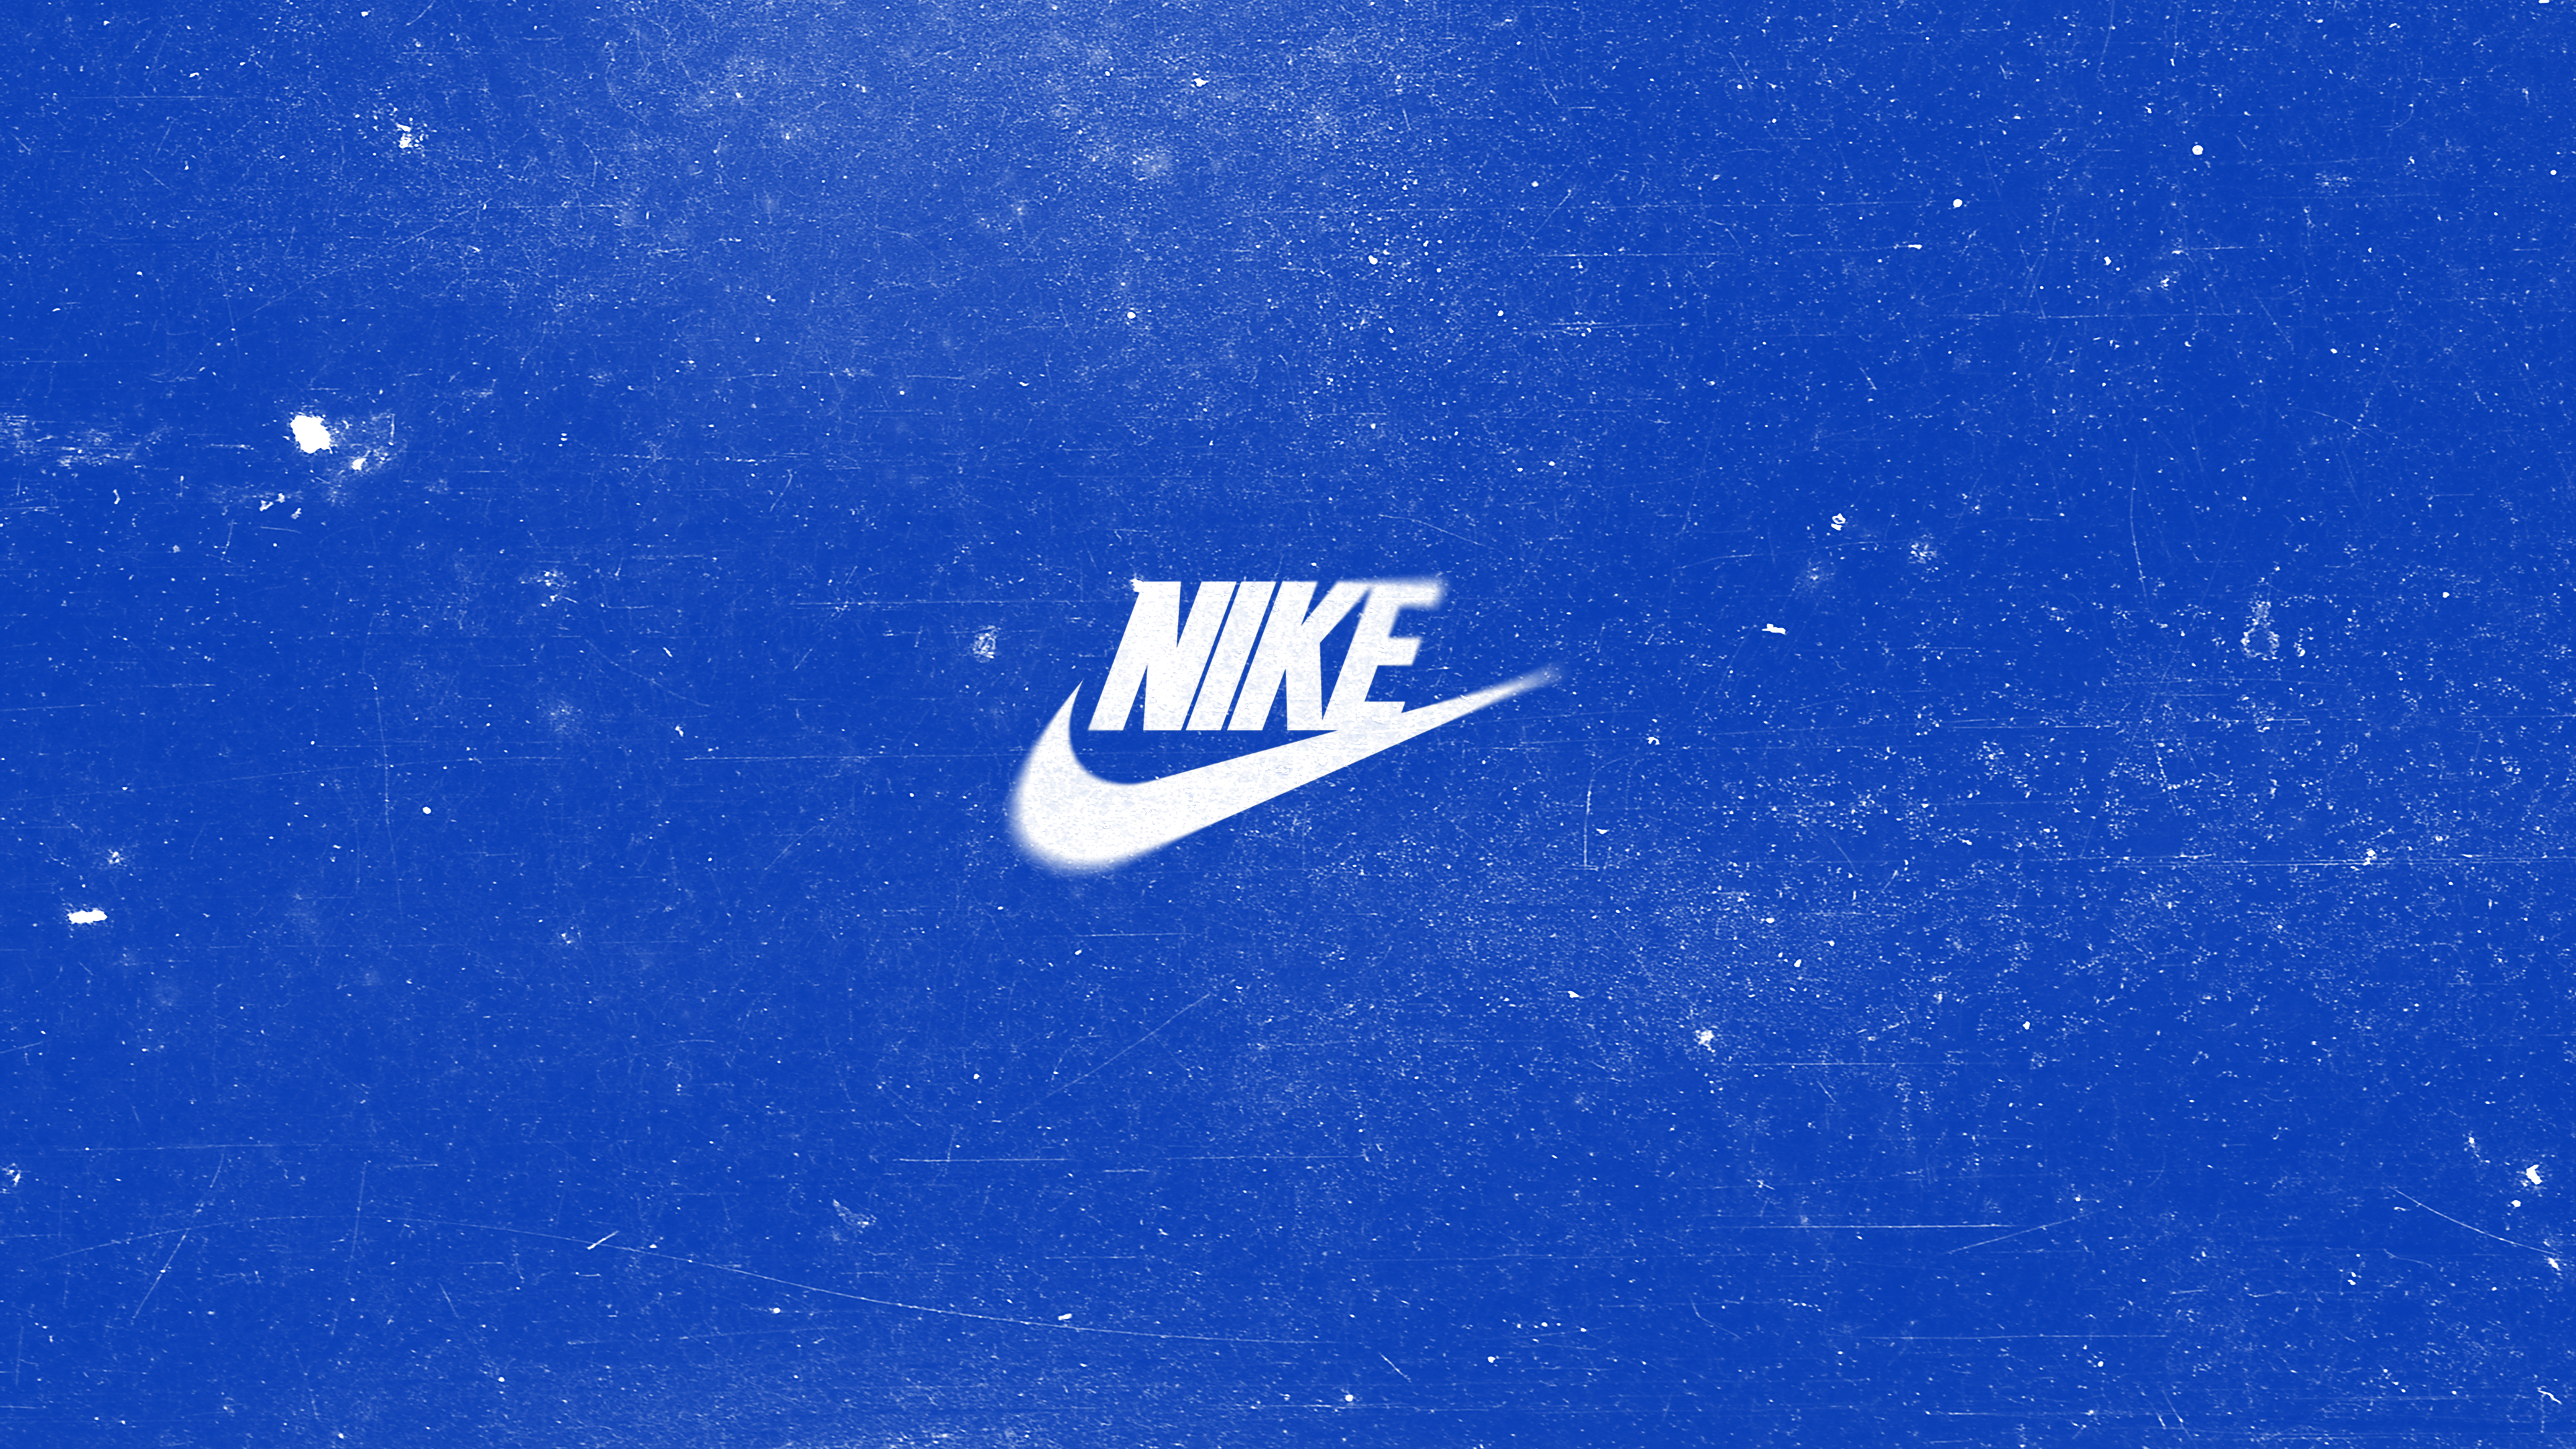 General 3840x2160 Nike simple background blue background grunge texture 4K wall minimalism logo brand